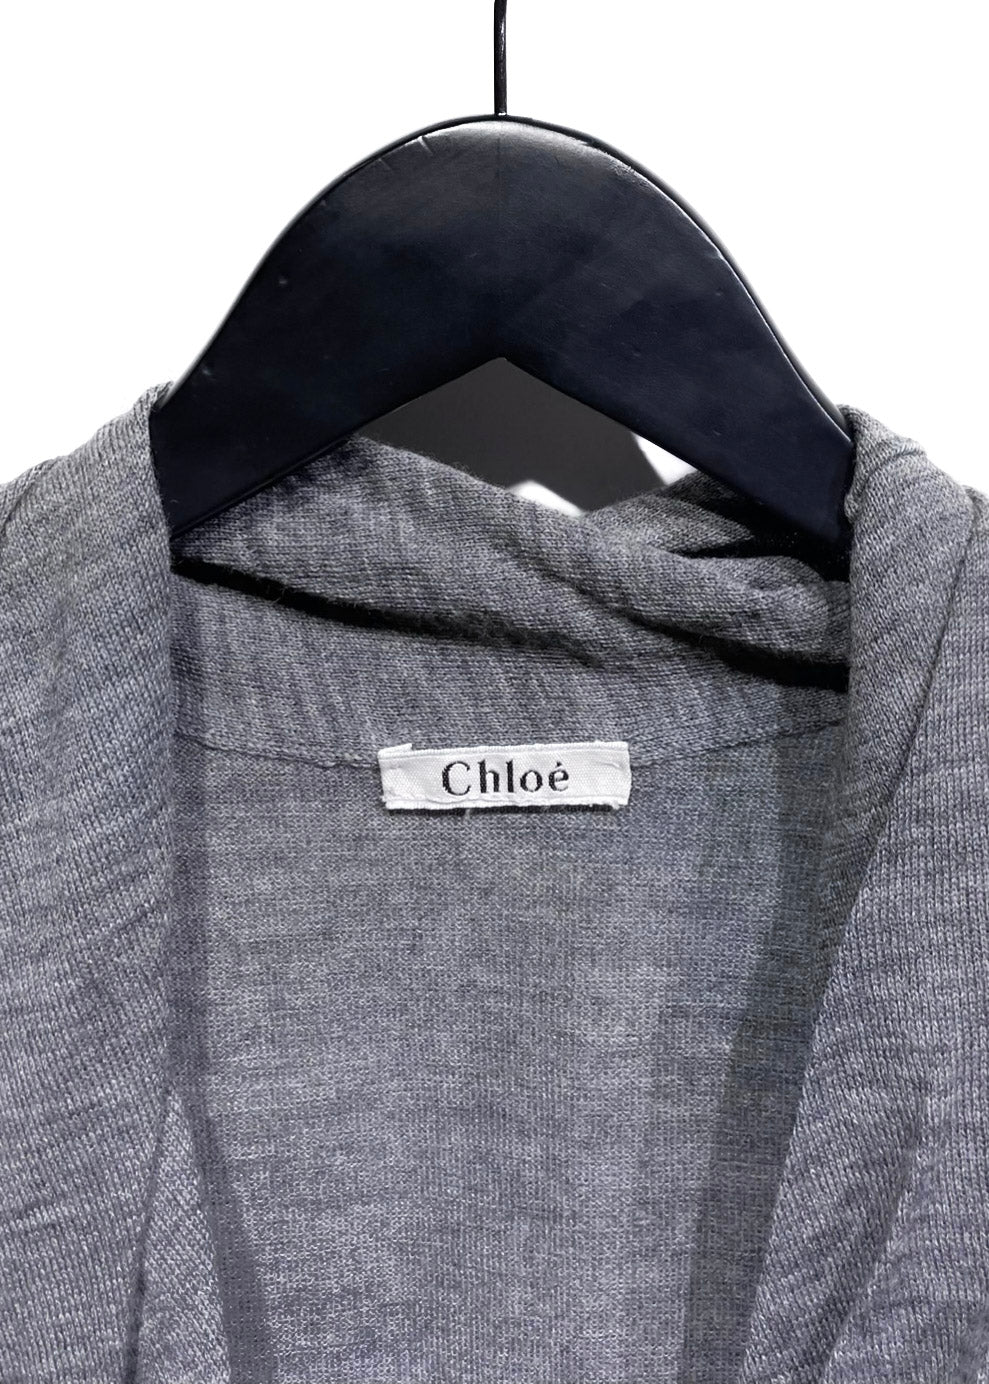 Chloé Grey Shawl Collar Sweater